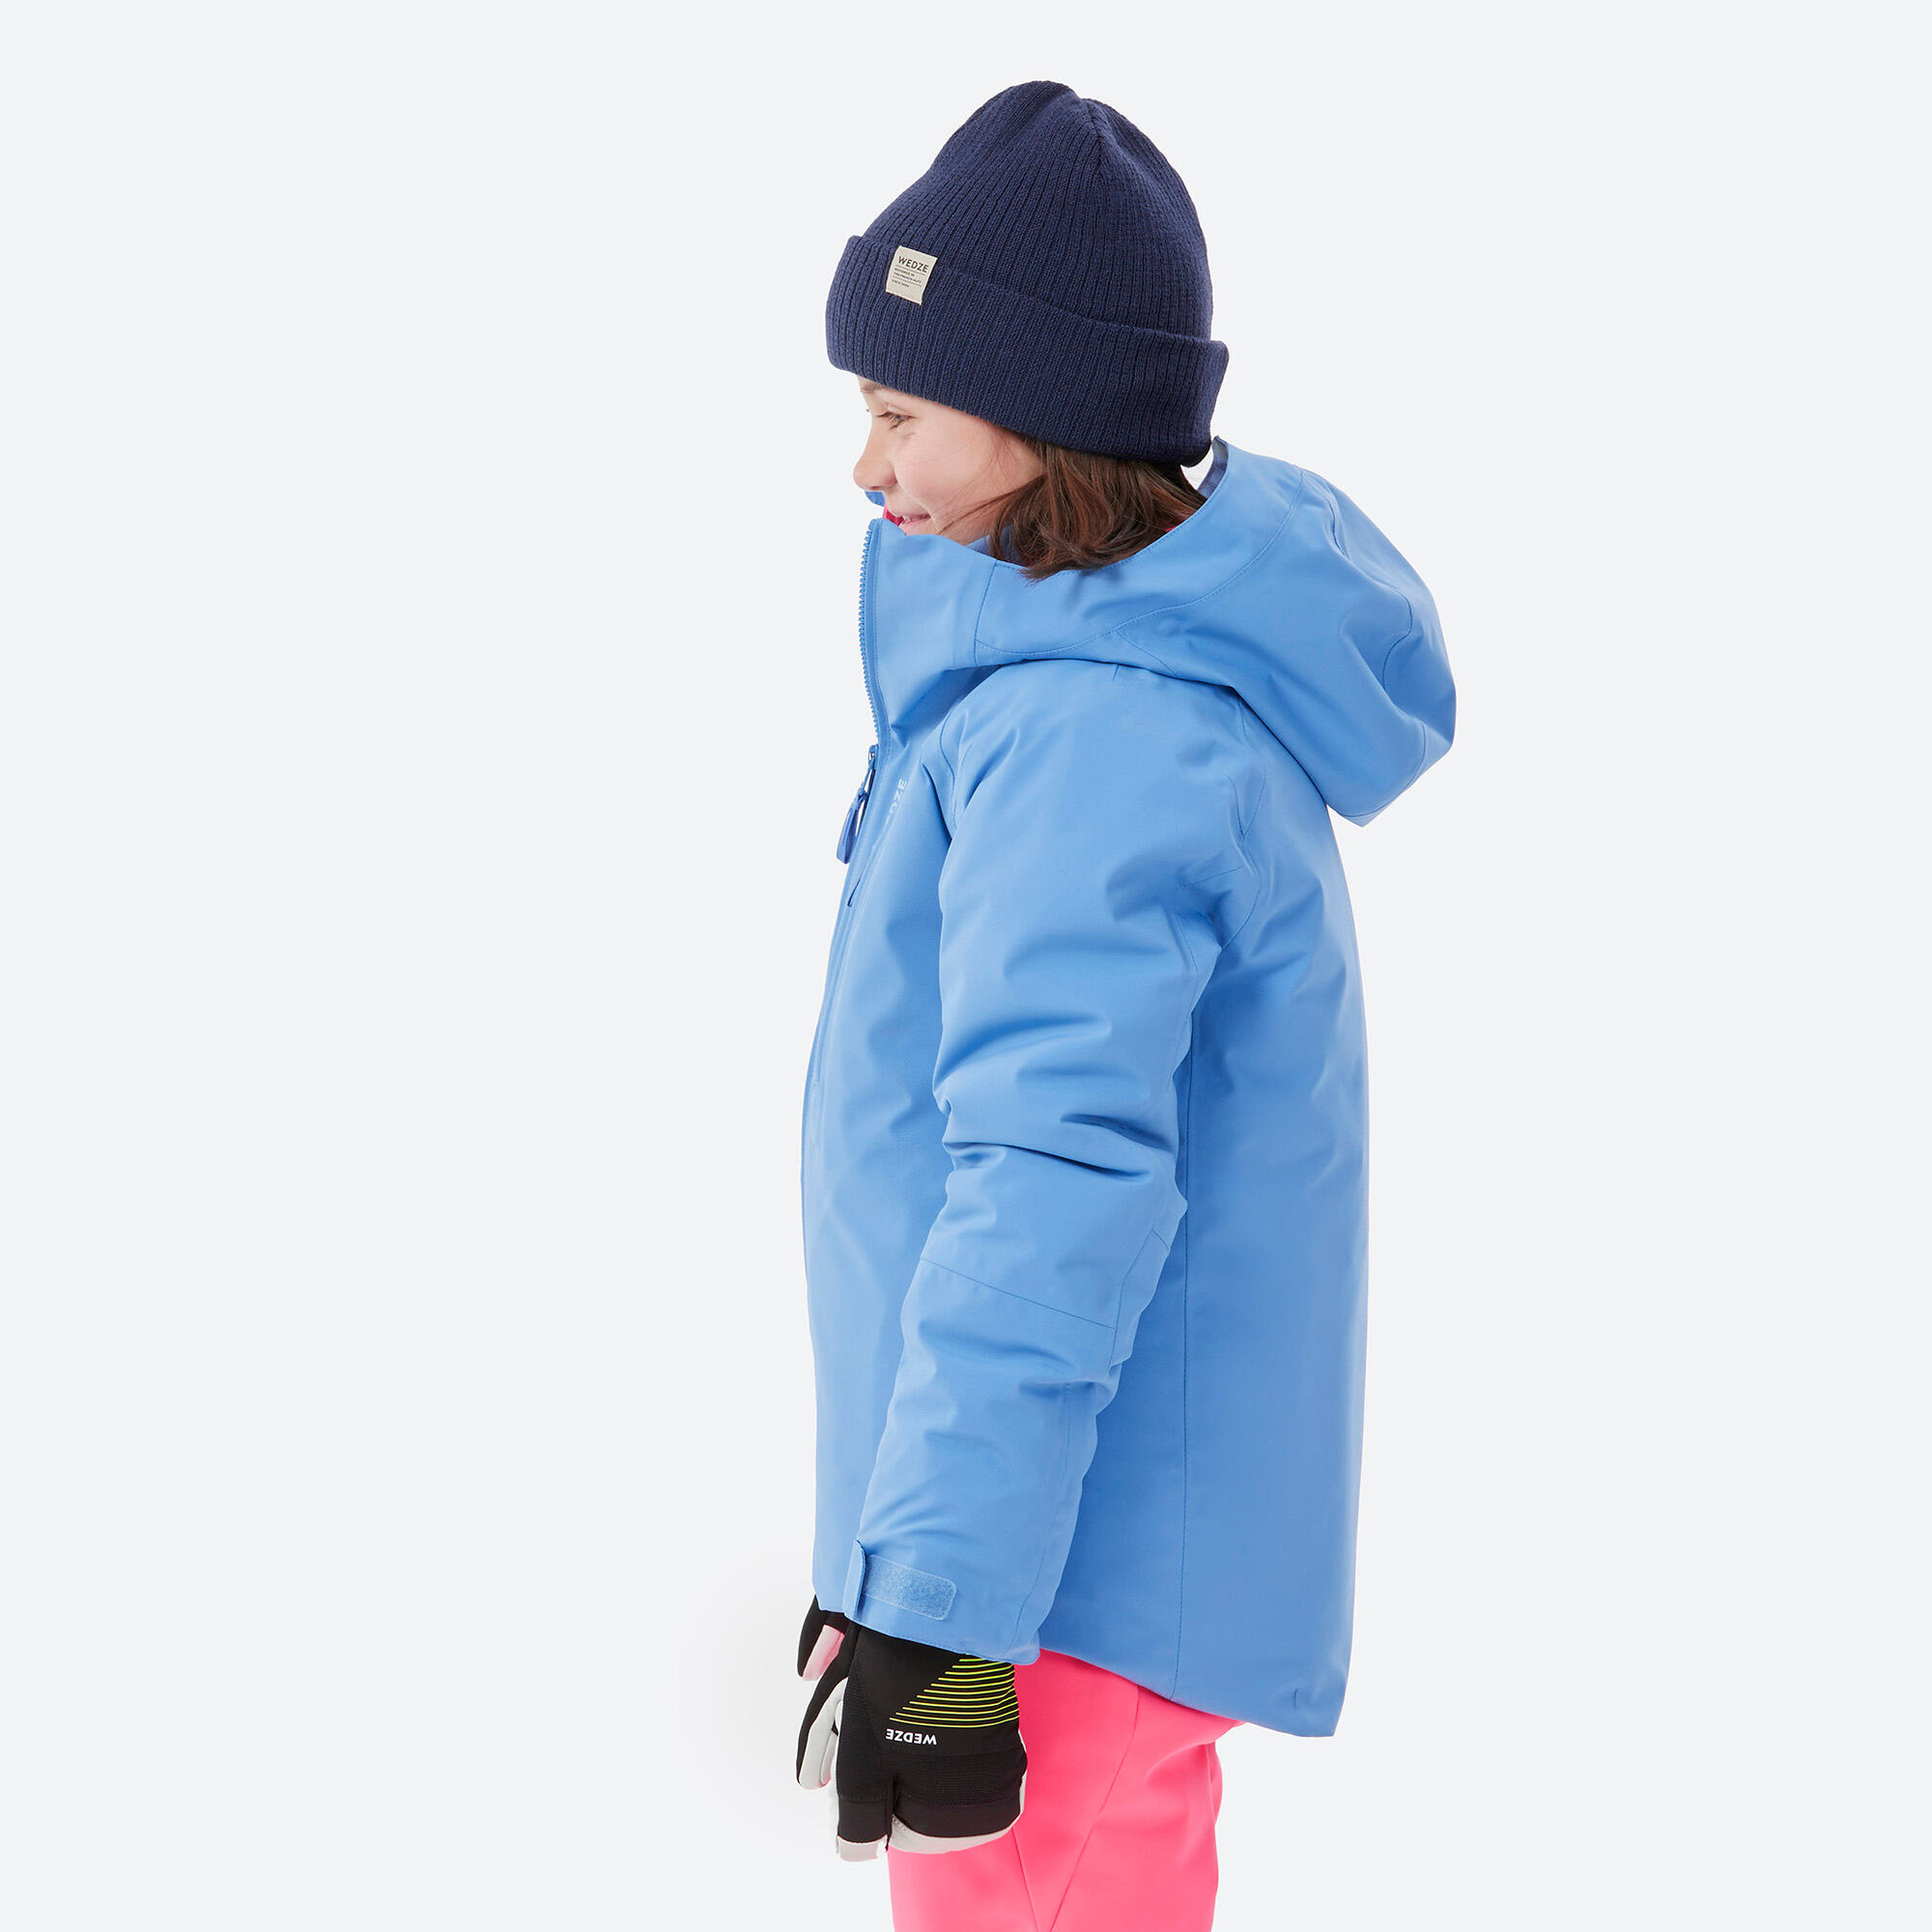 Kids’ Warm and Waterproof Ski Jacket 550 - Blue 3/10